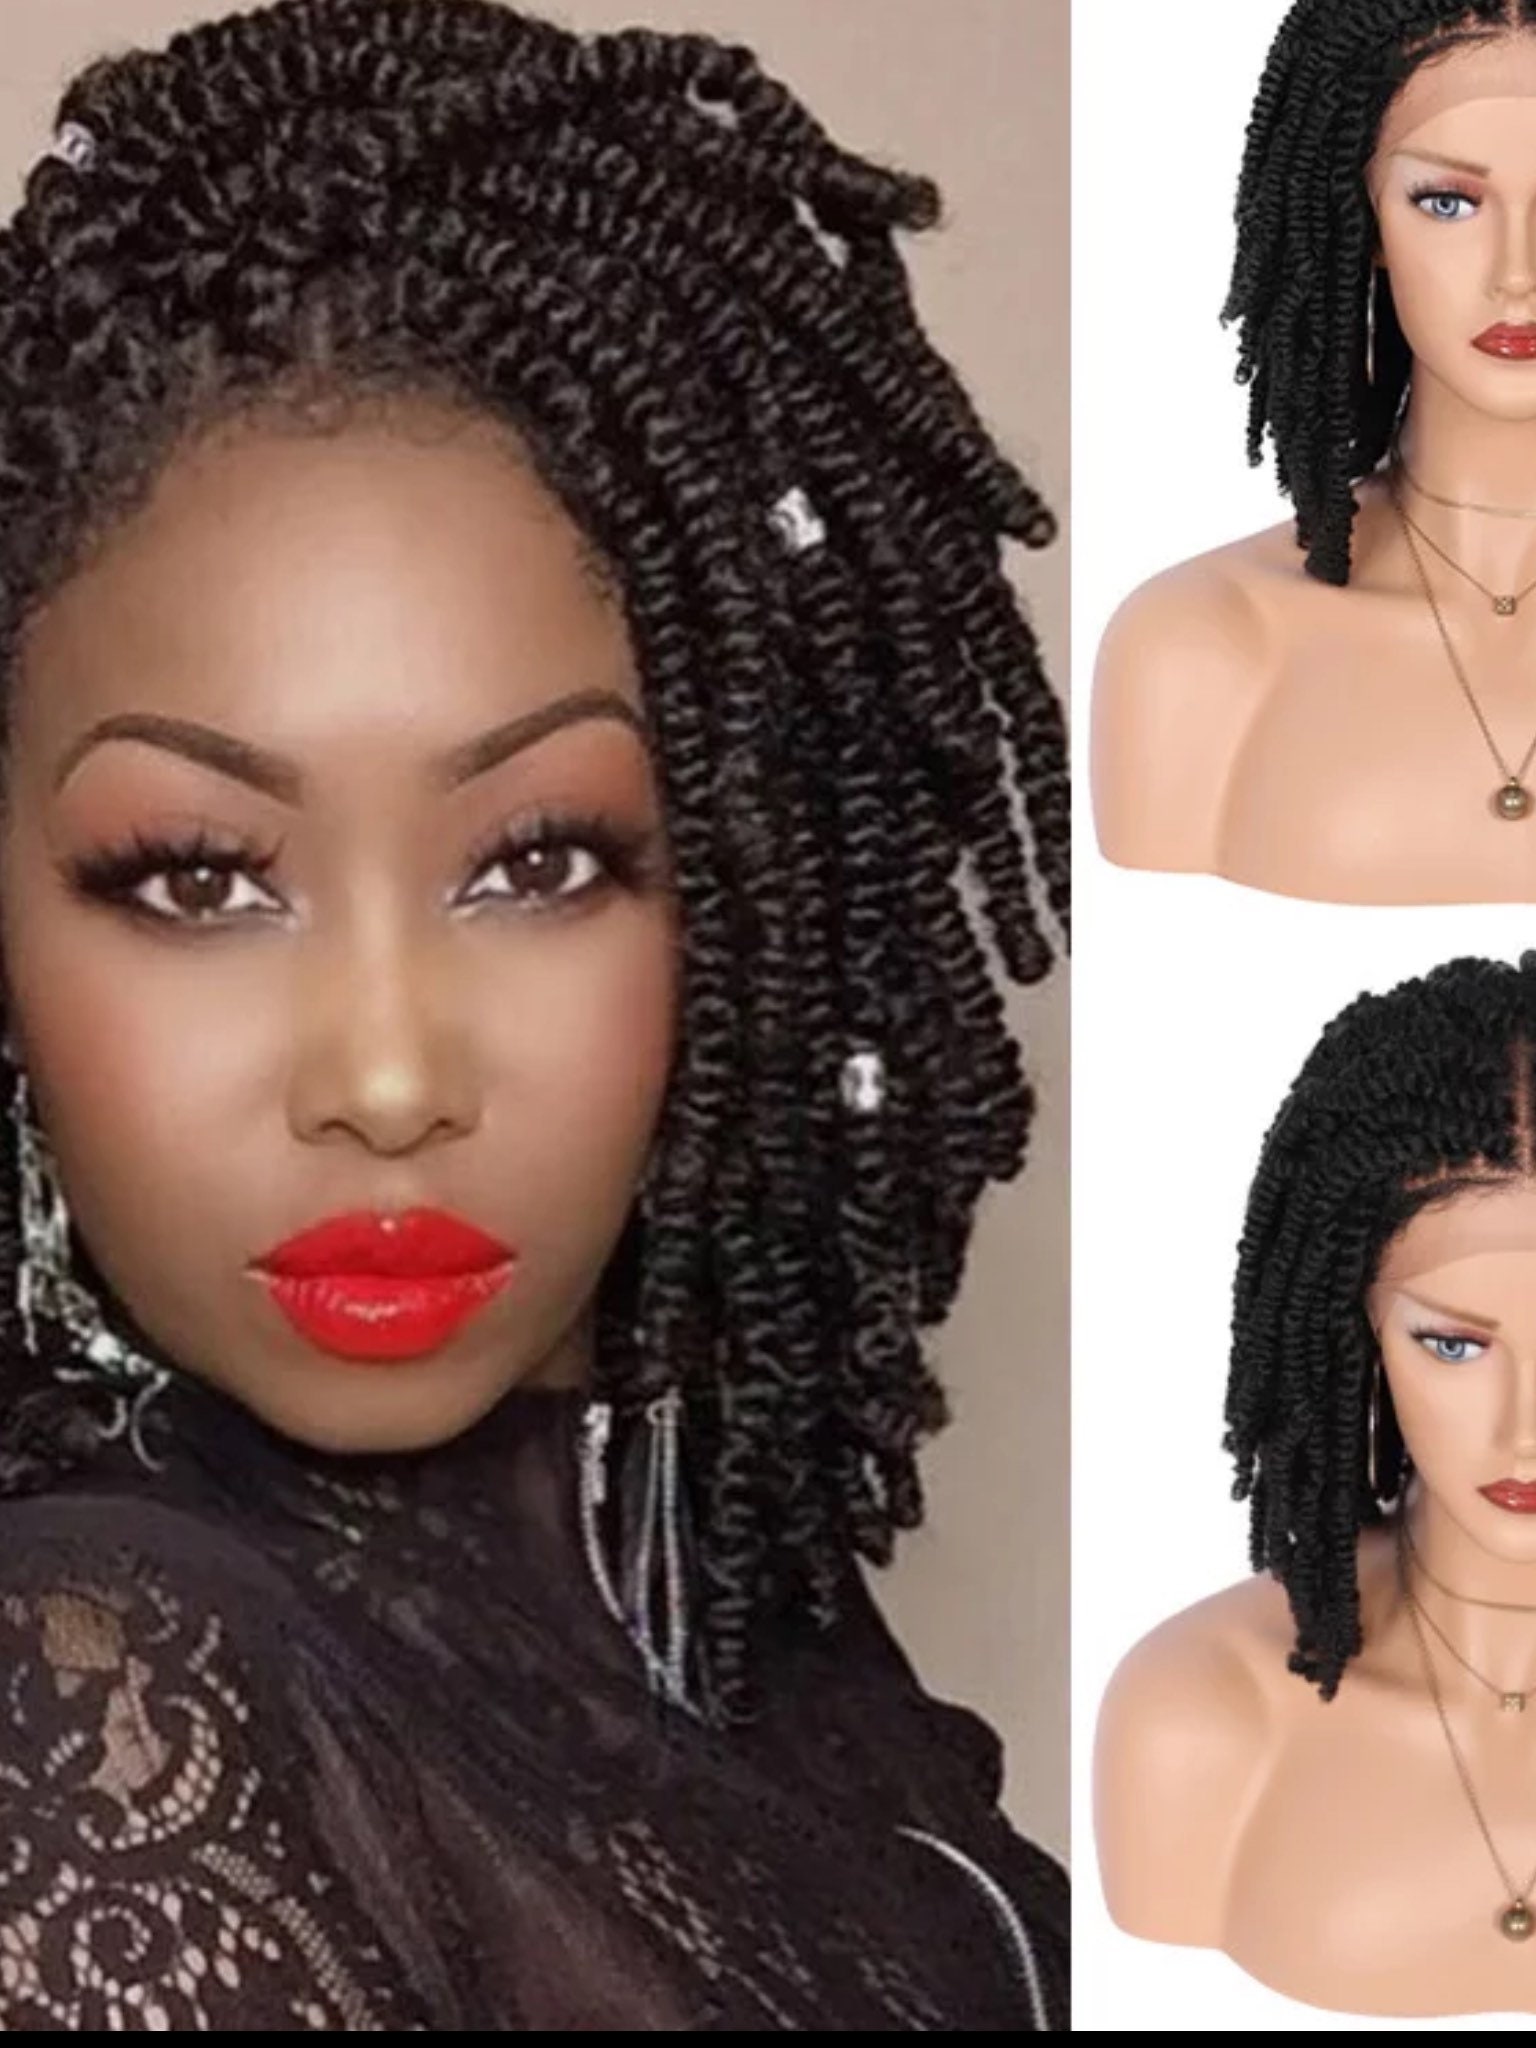 Short Male Model Cornrow Braids Wig Black Woman Full Lace Human Hair  Hairstyles Braided Wigs, Braids Wigs, Lace Wig, Box Braids Male Wig 